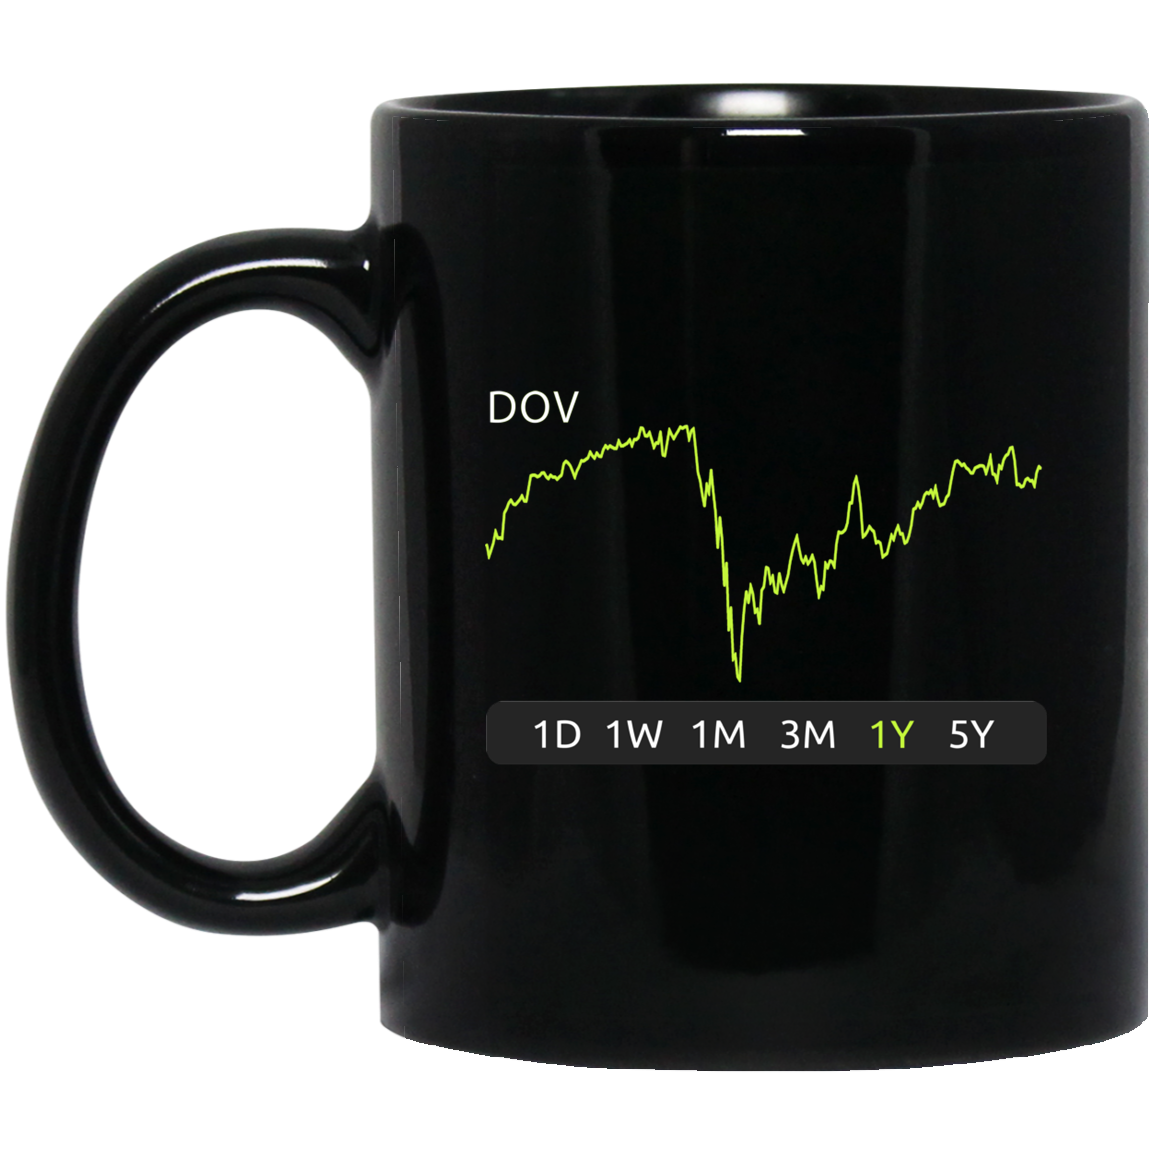 DOV Stock 1y Mug